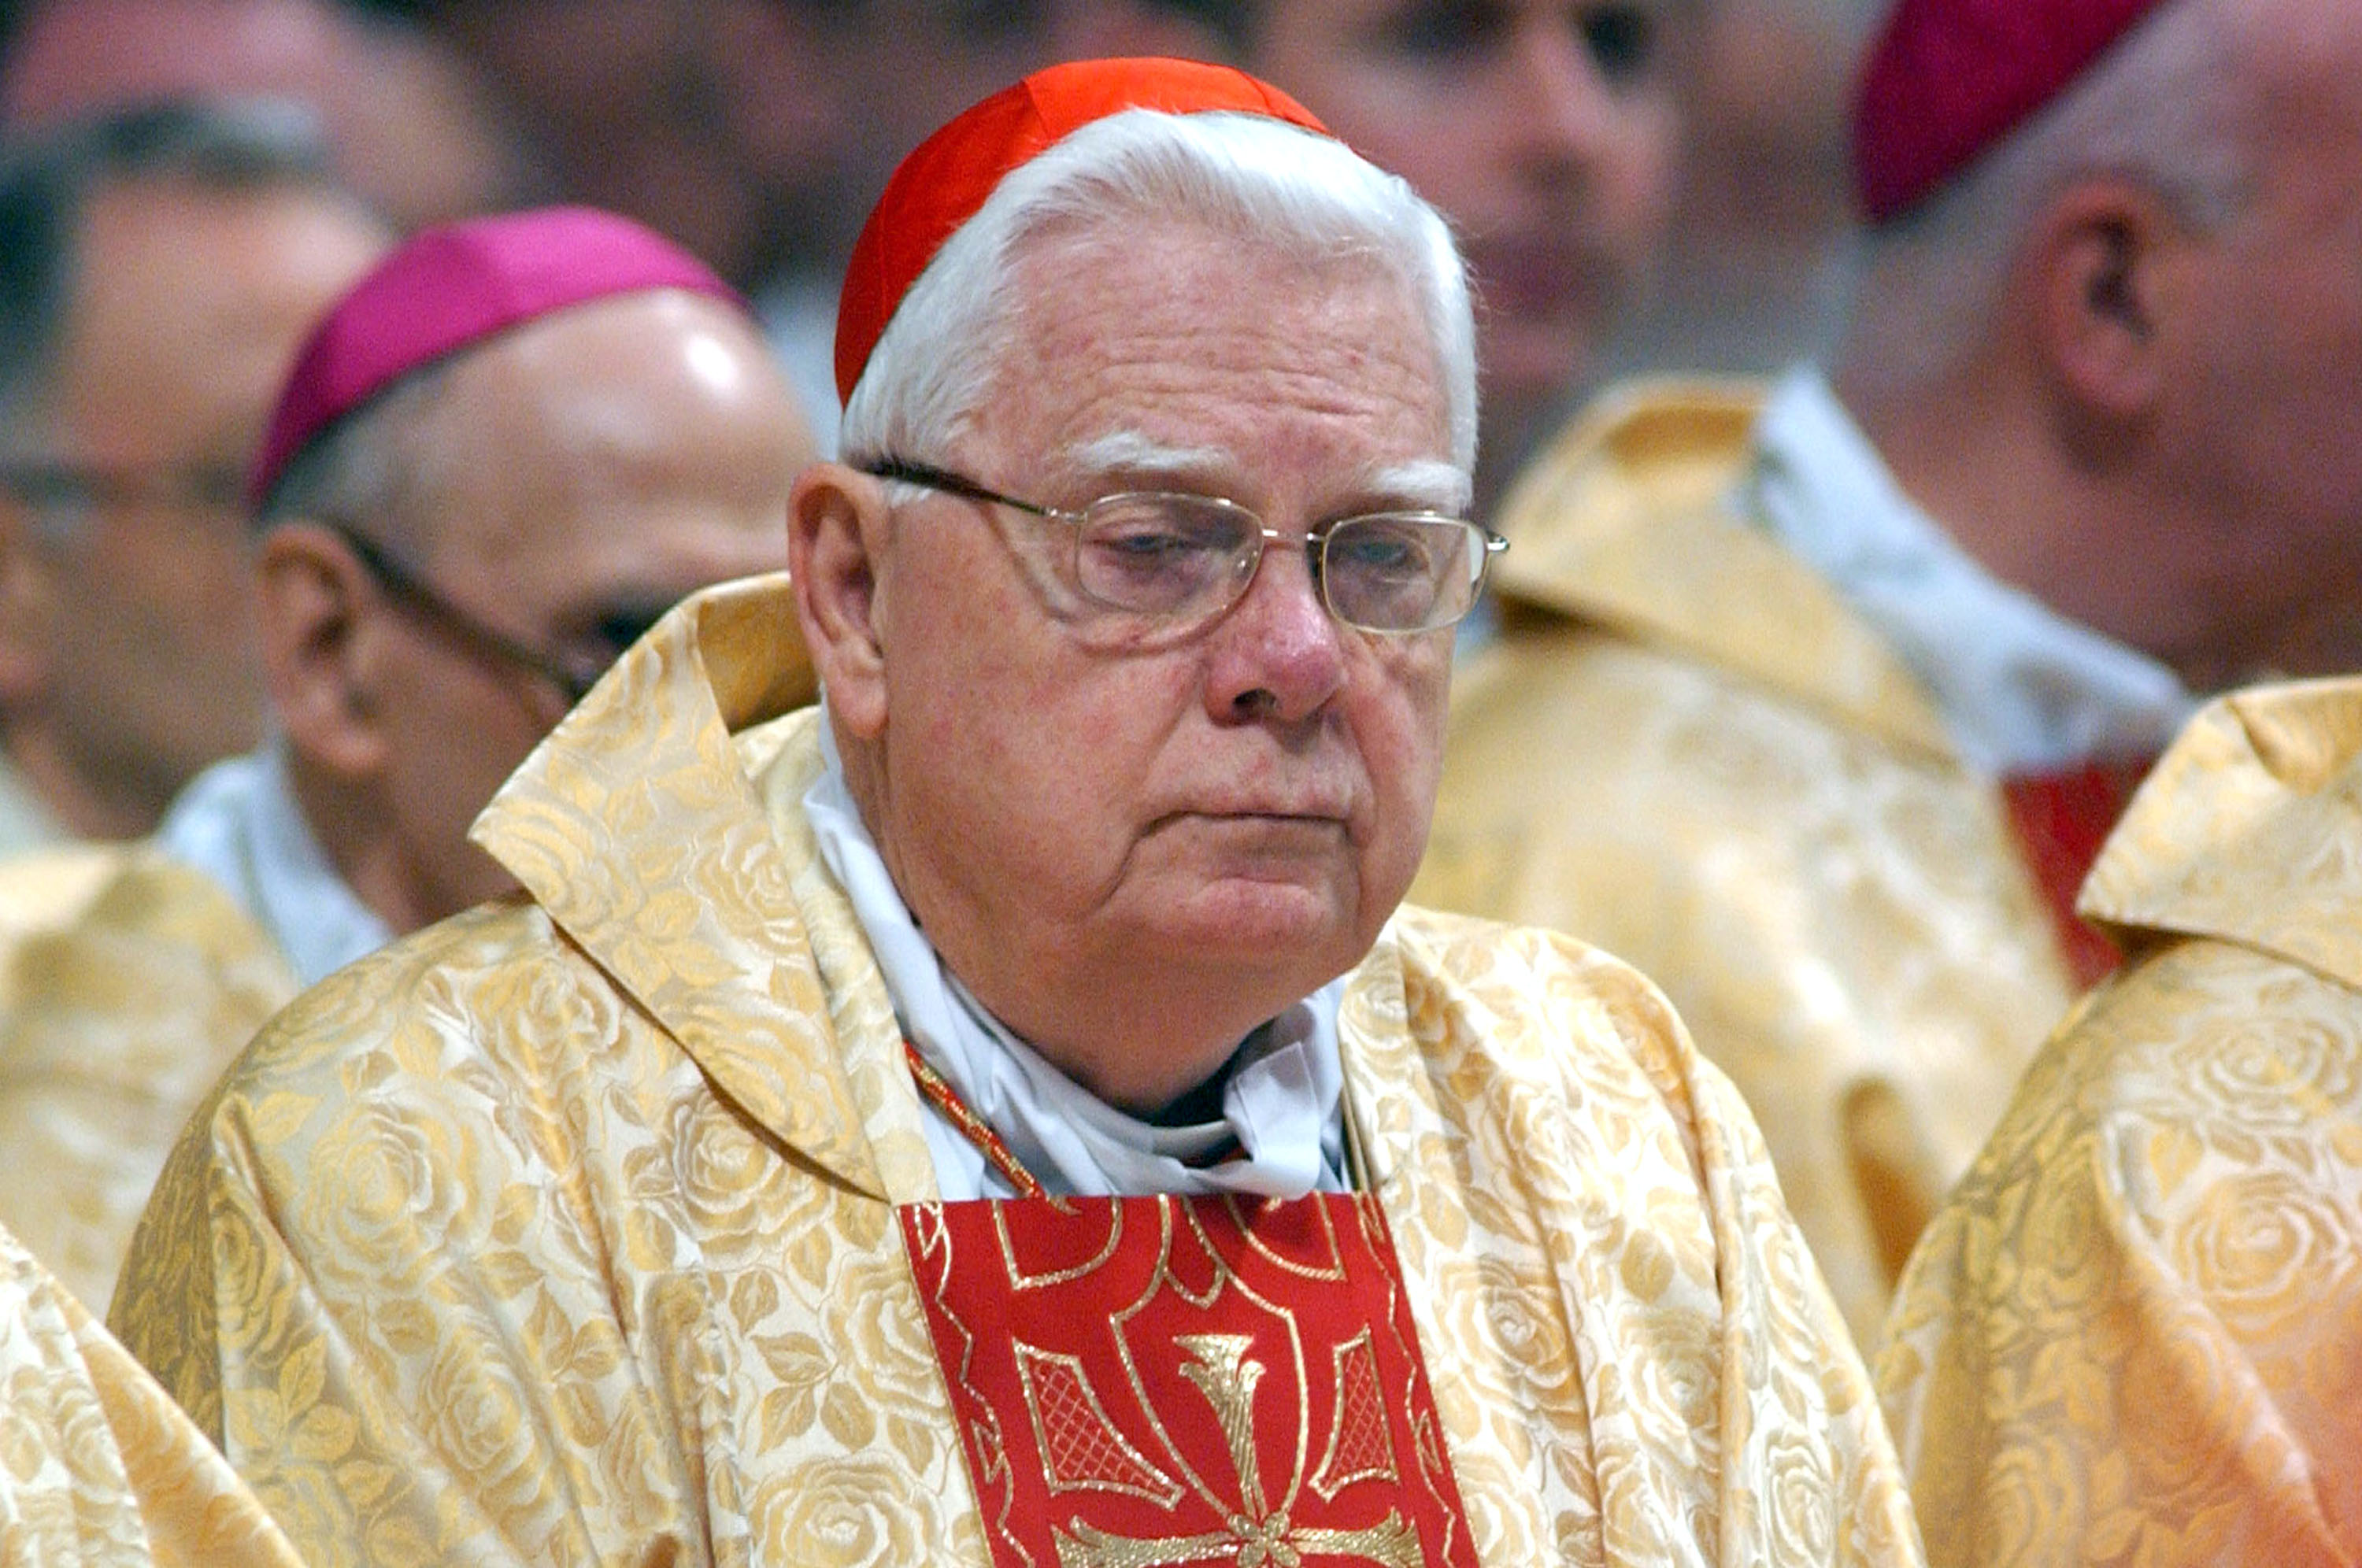 Cardinal Bernard Law is dead at 86